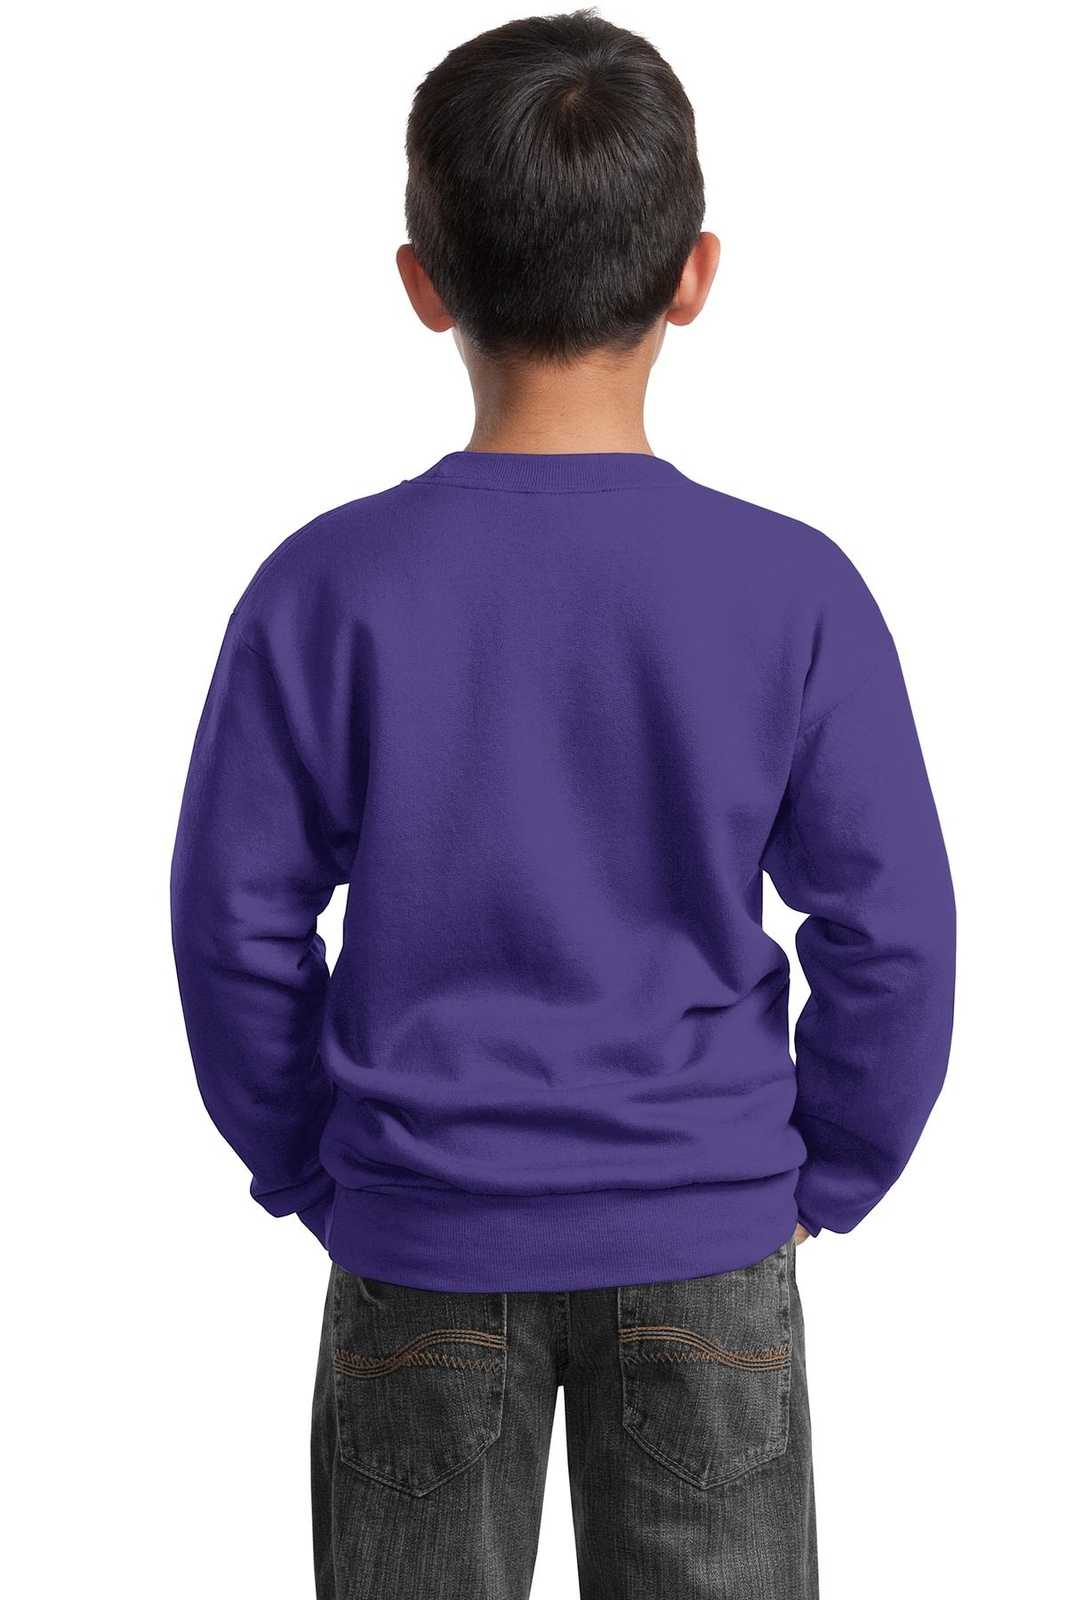 Port & Company PC90Y Youth Core Fleece Crewneck Sweatshirt - Purple - HIT a Double - 1